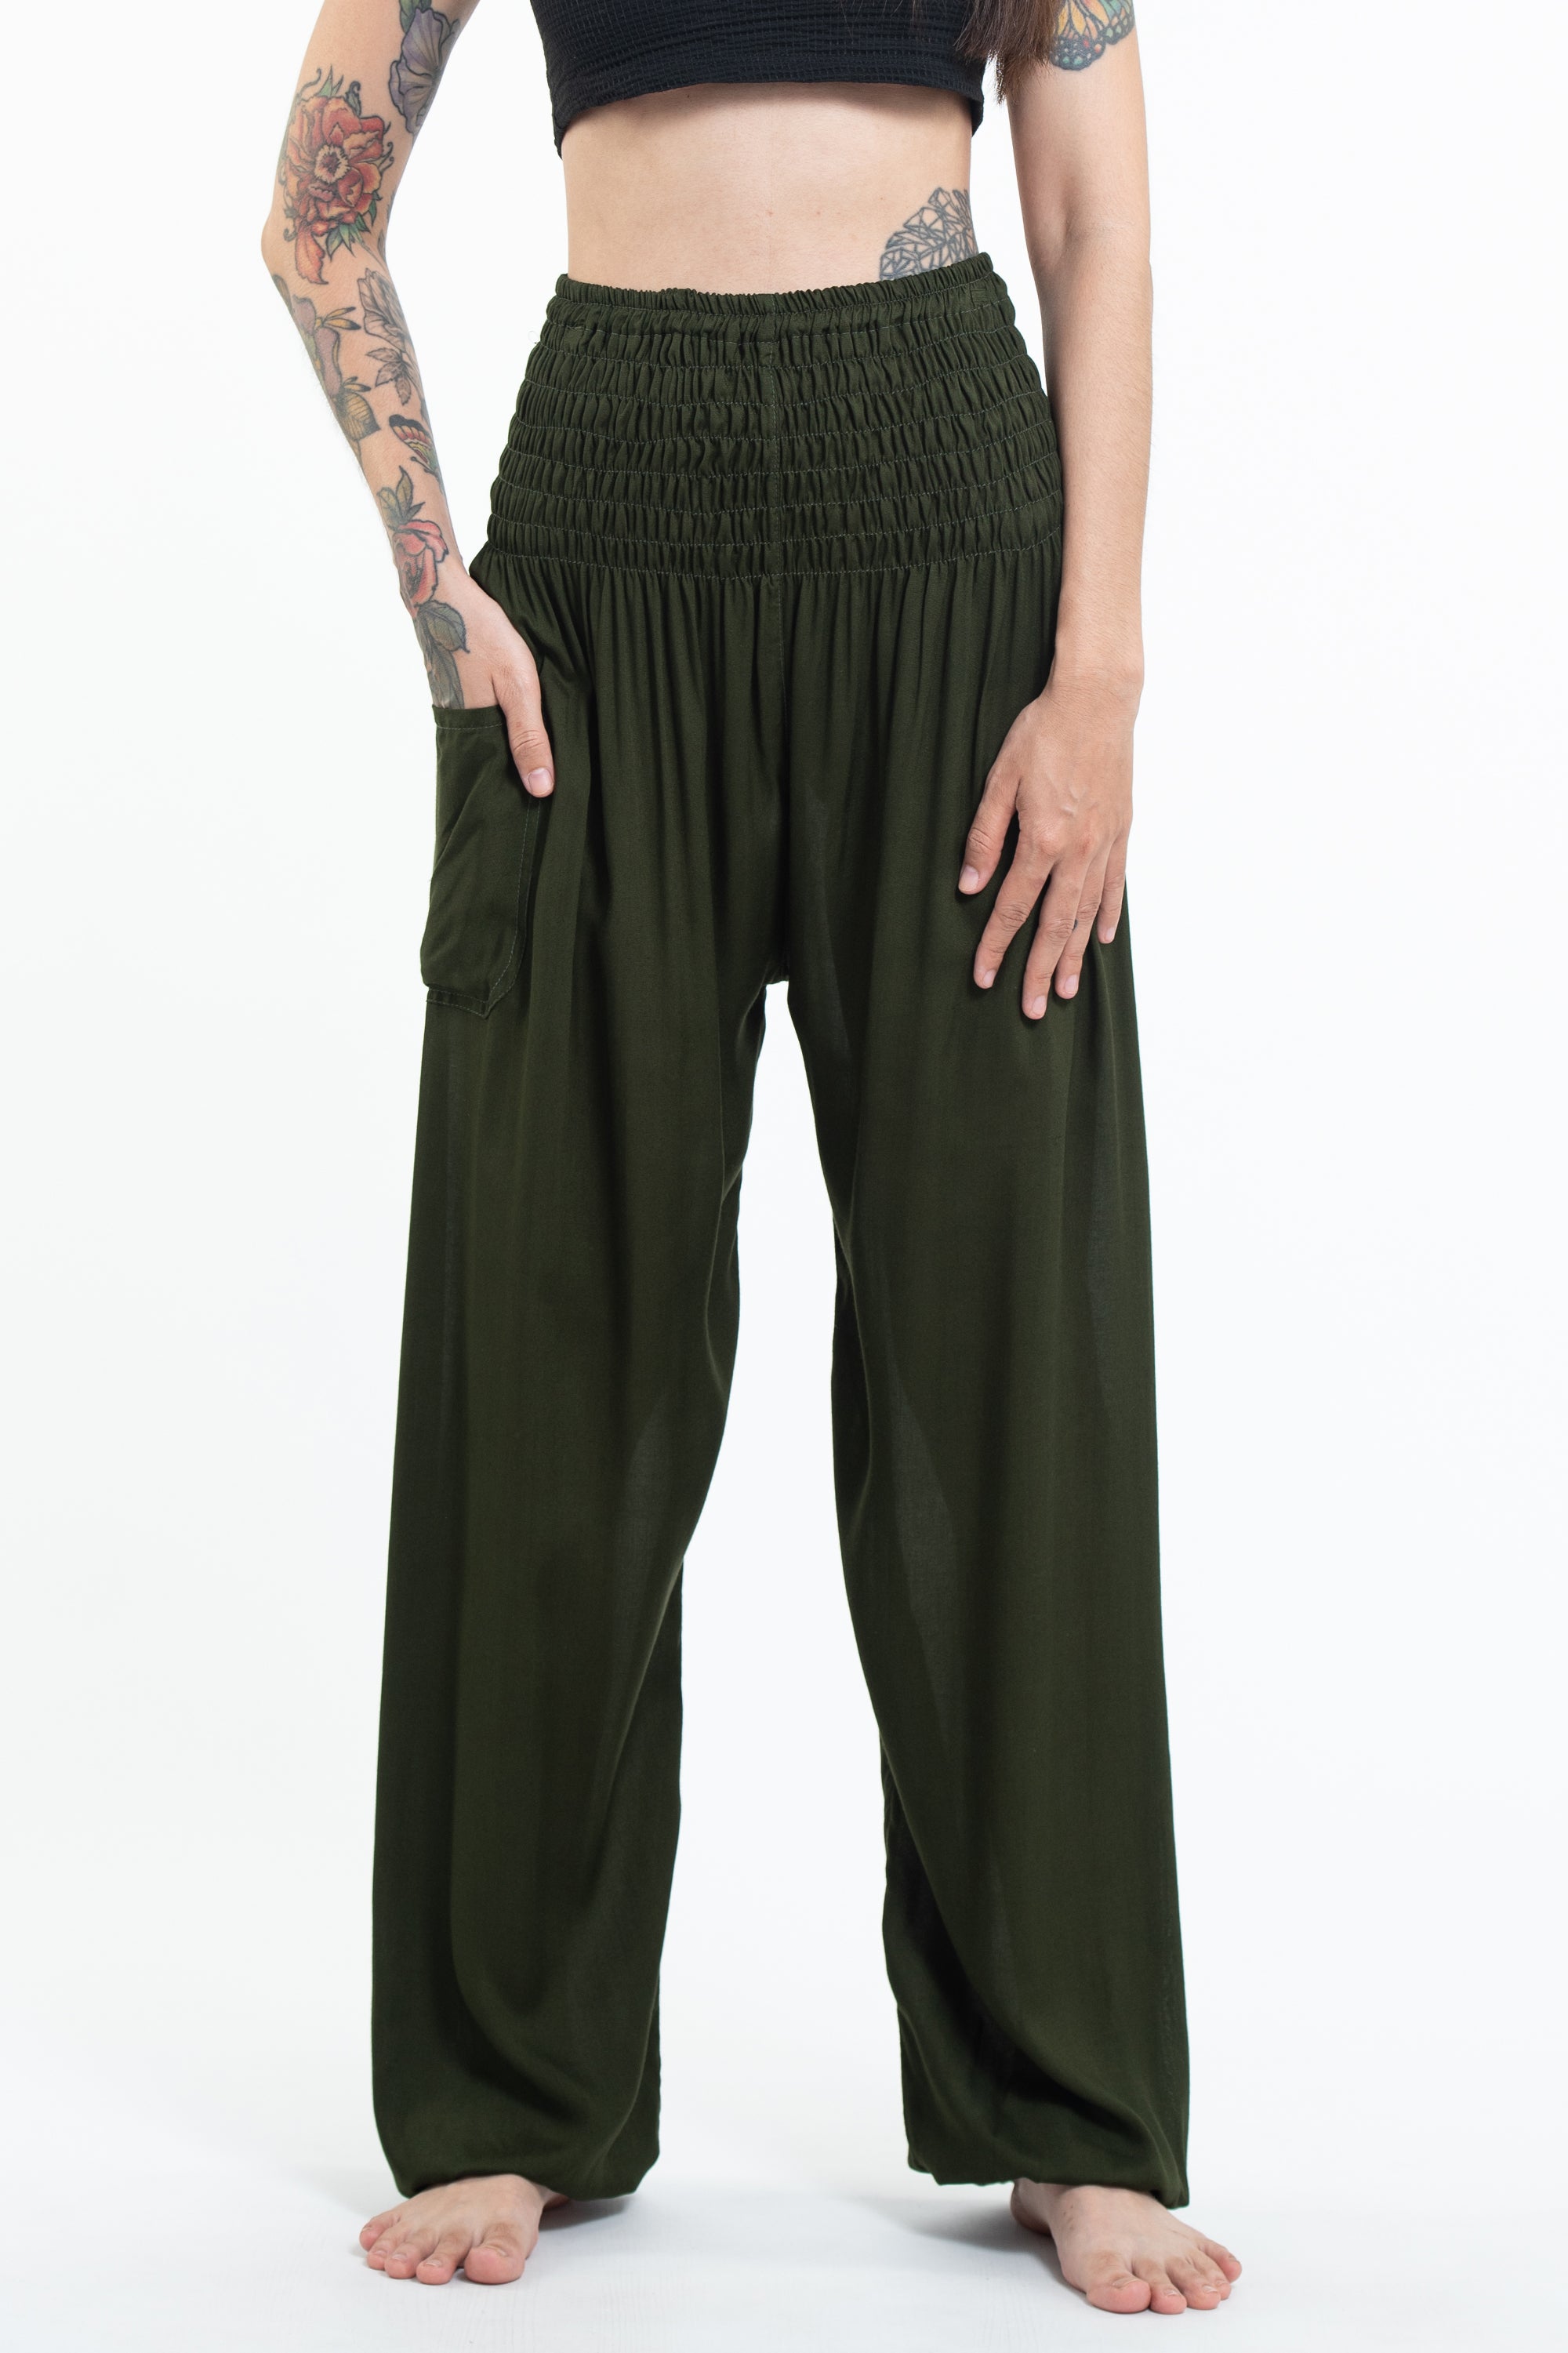 Solid Color Women's Harem Pants in Dark Green